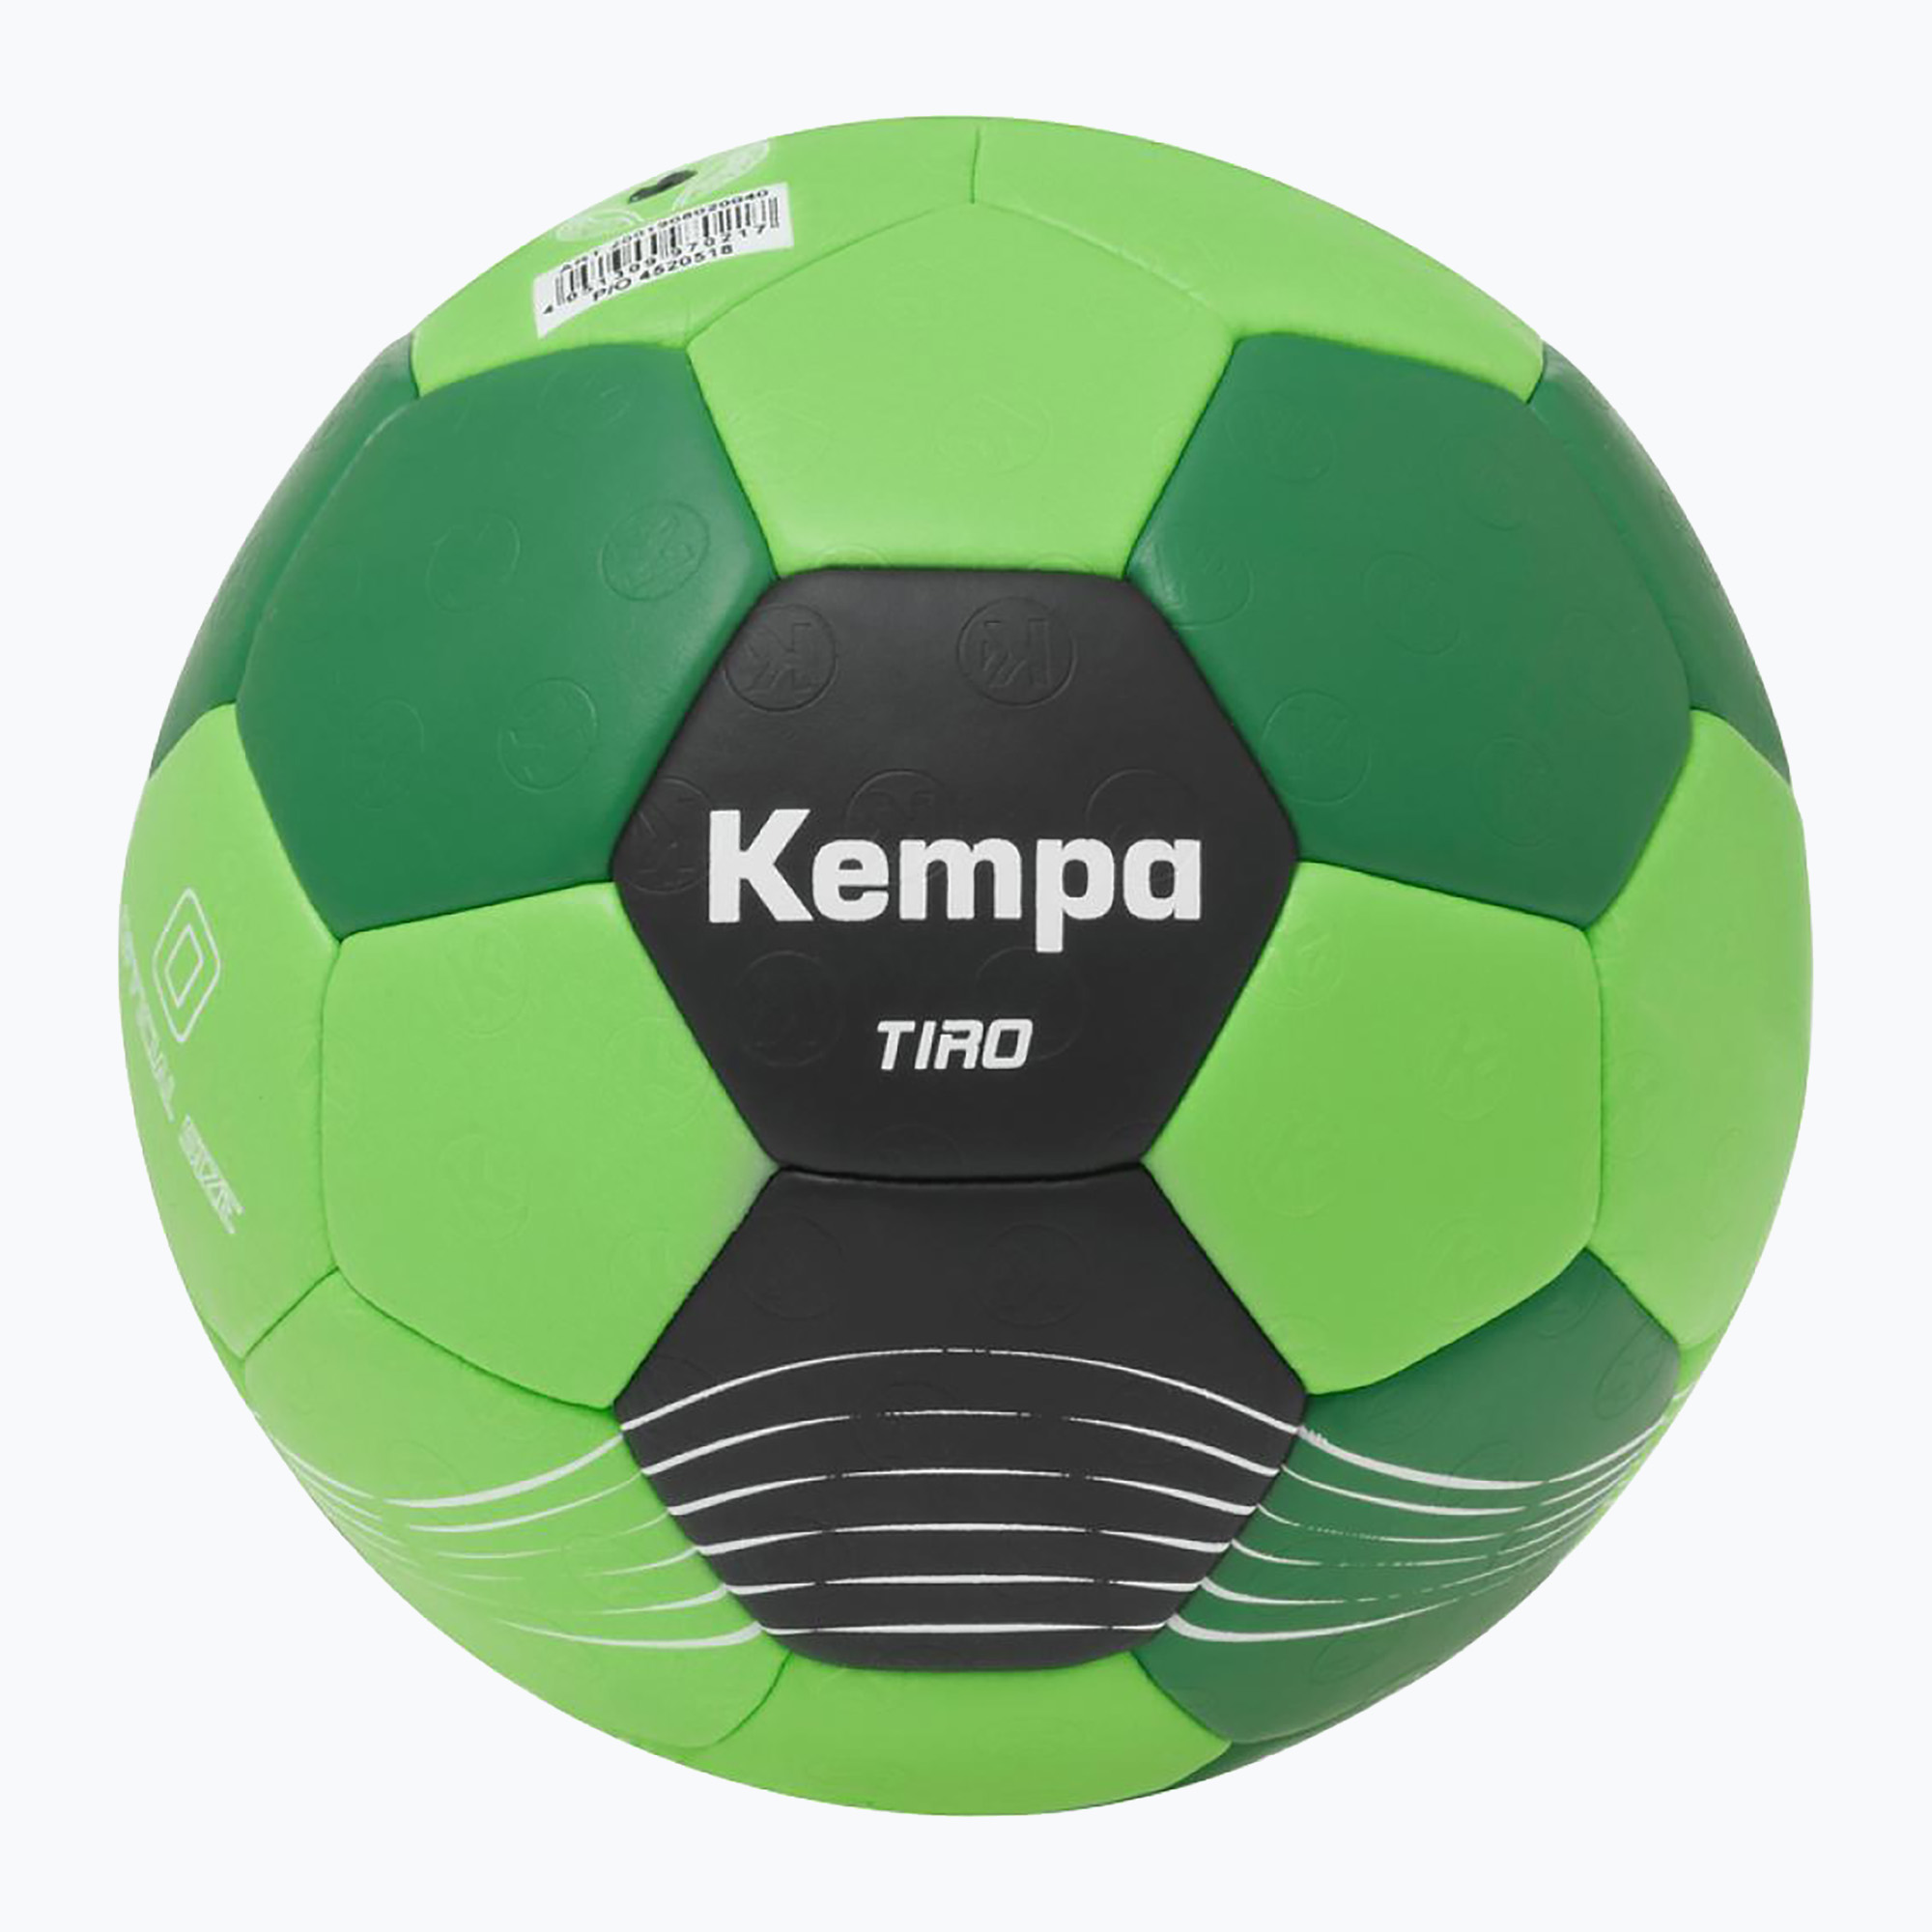 Kempa Tiro handball 200190802/0 veľkosť 0